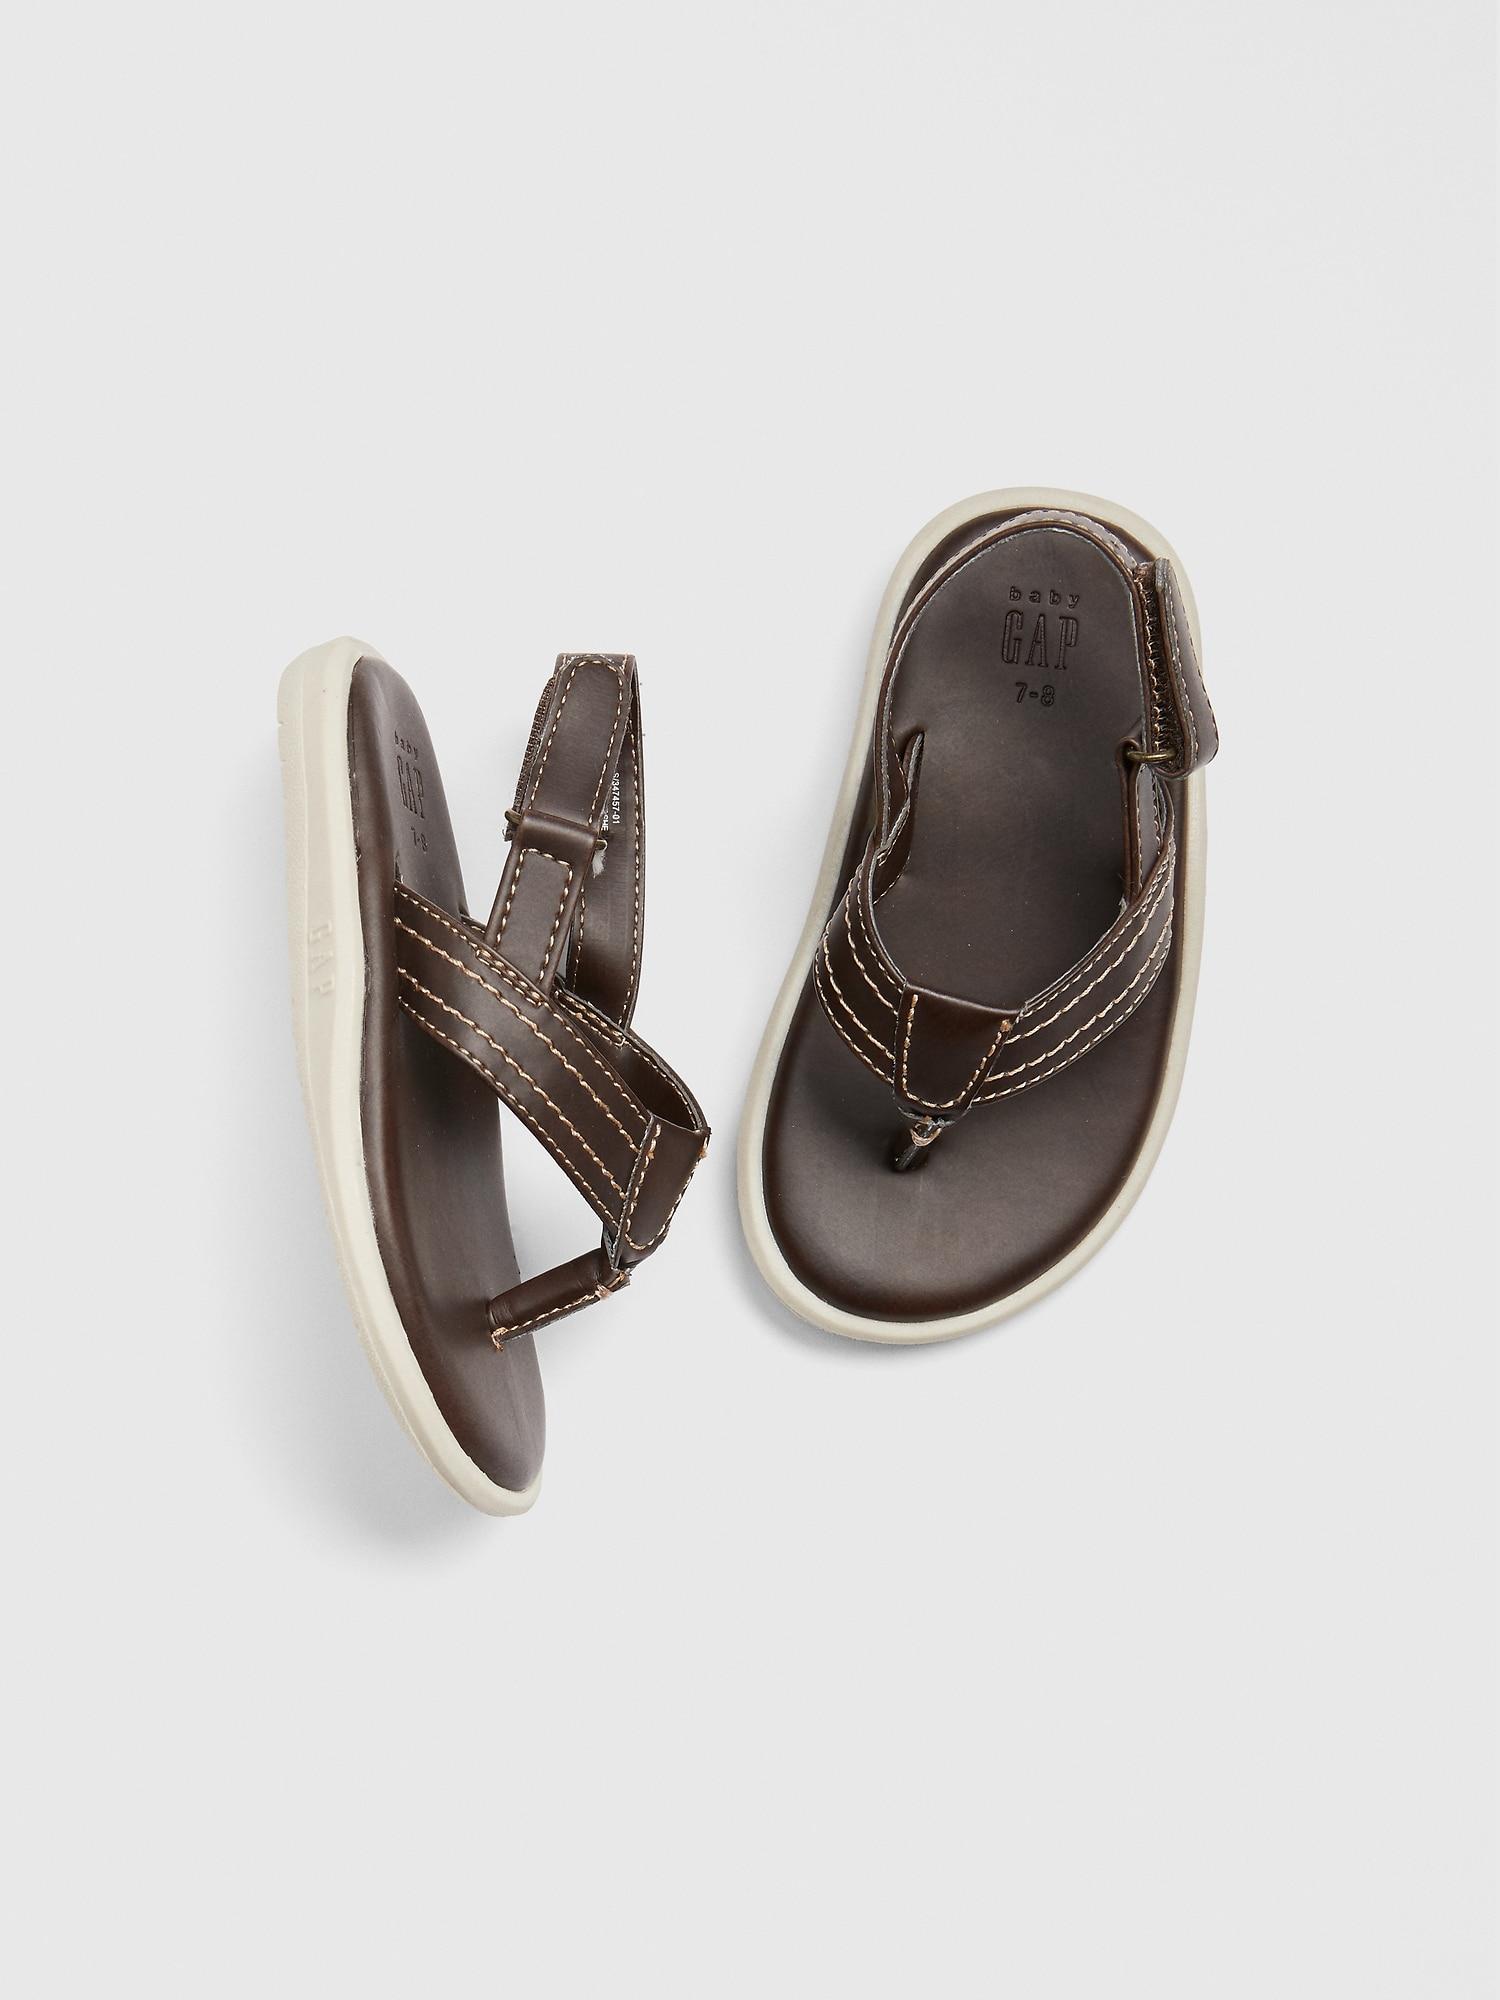 Gap Faux-leather Flip Flops in Brown for Men - Lyst